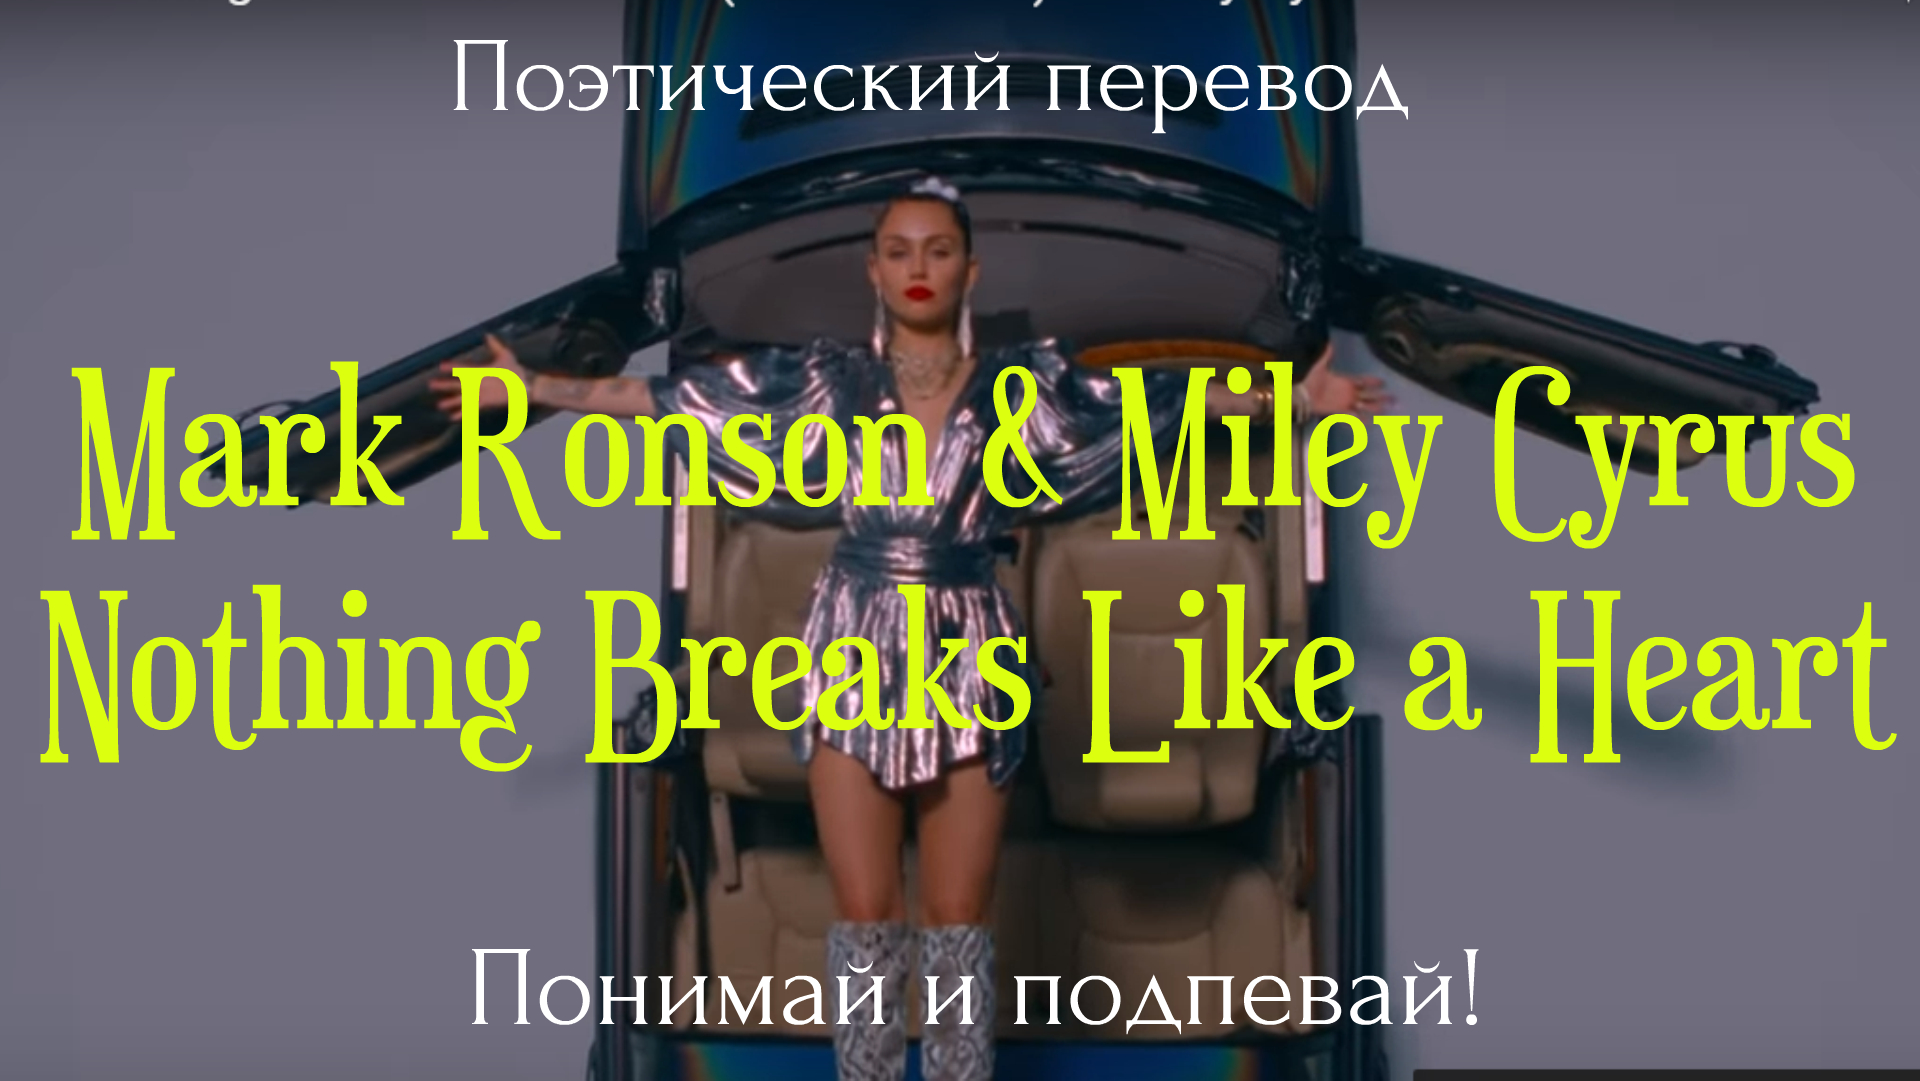 Mark Ronson Miley Cyrus nothing Breaks like a Heart. Nothing Breaks like a Heart Miley Cyrus текст. Майли Сайрус nothing Breaks  текст. Miley Cyrus nothing Breaks like a Heart перевод.